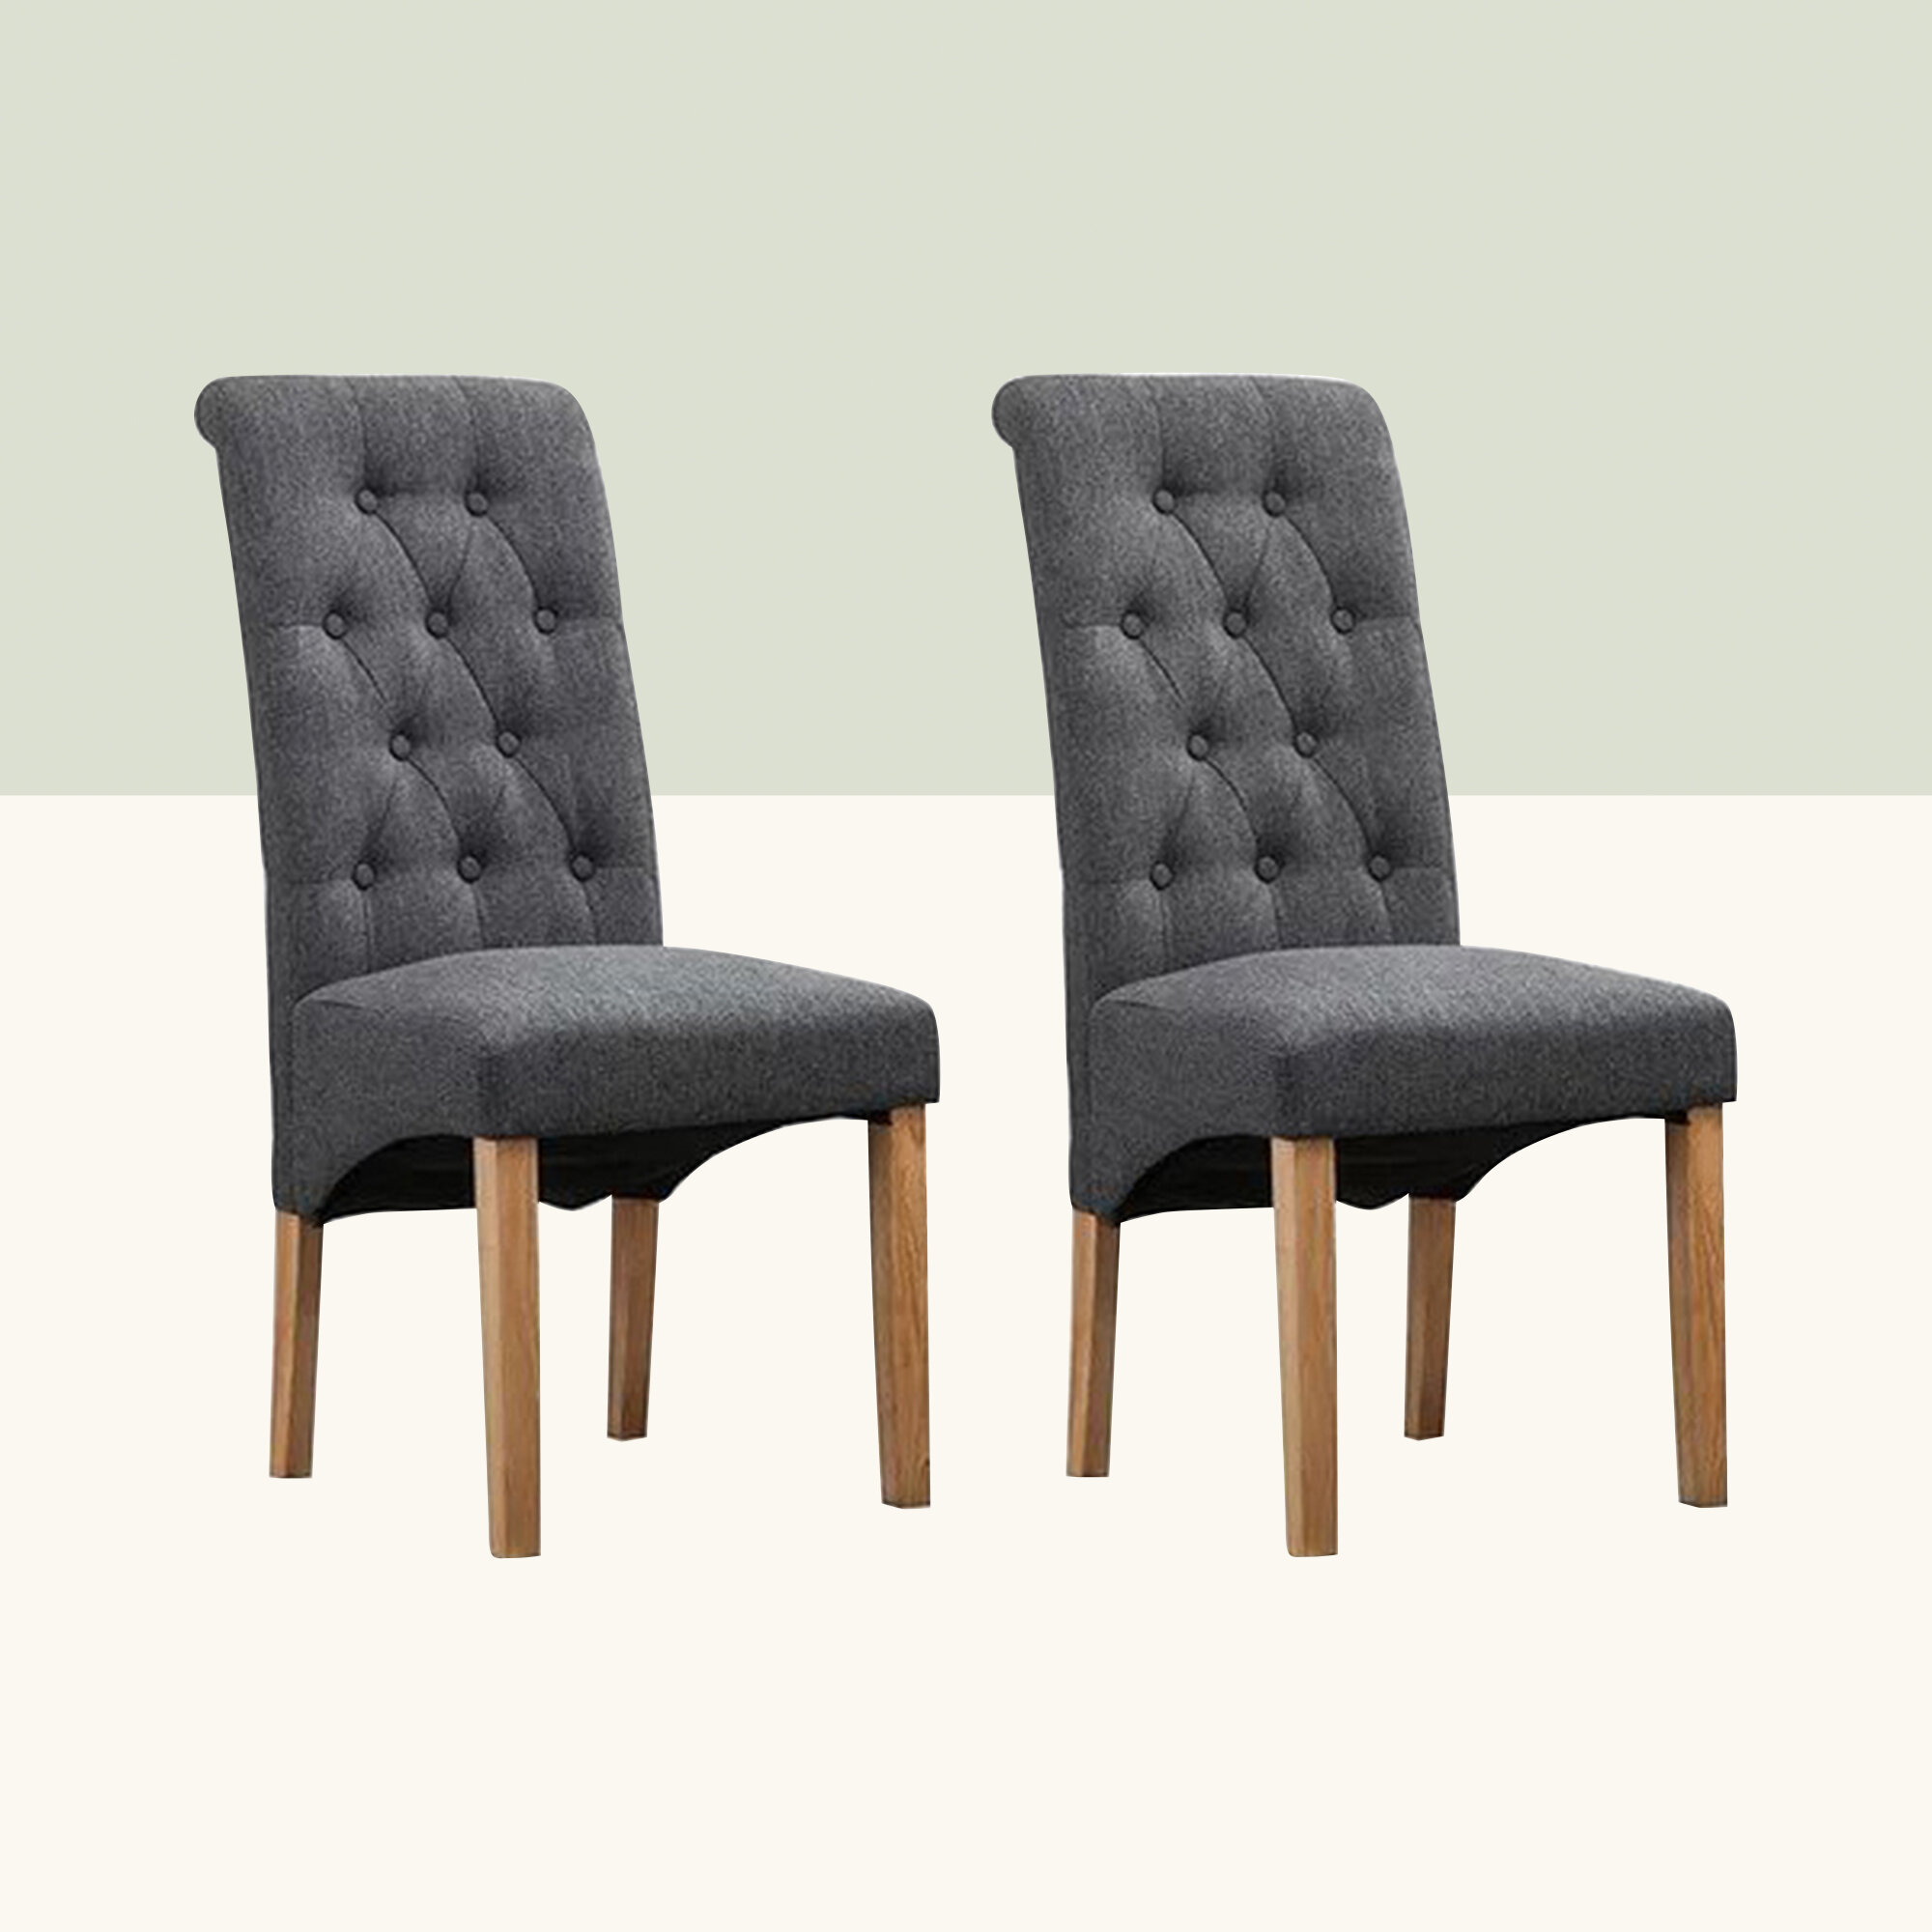 Hykkon Anya Upholstered Dining Chair Reviews Wayfair Co Uk